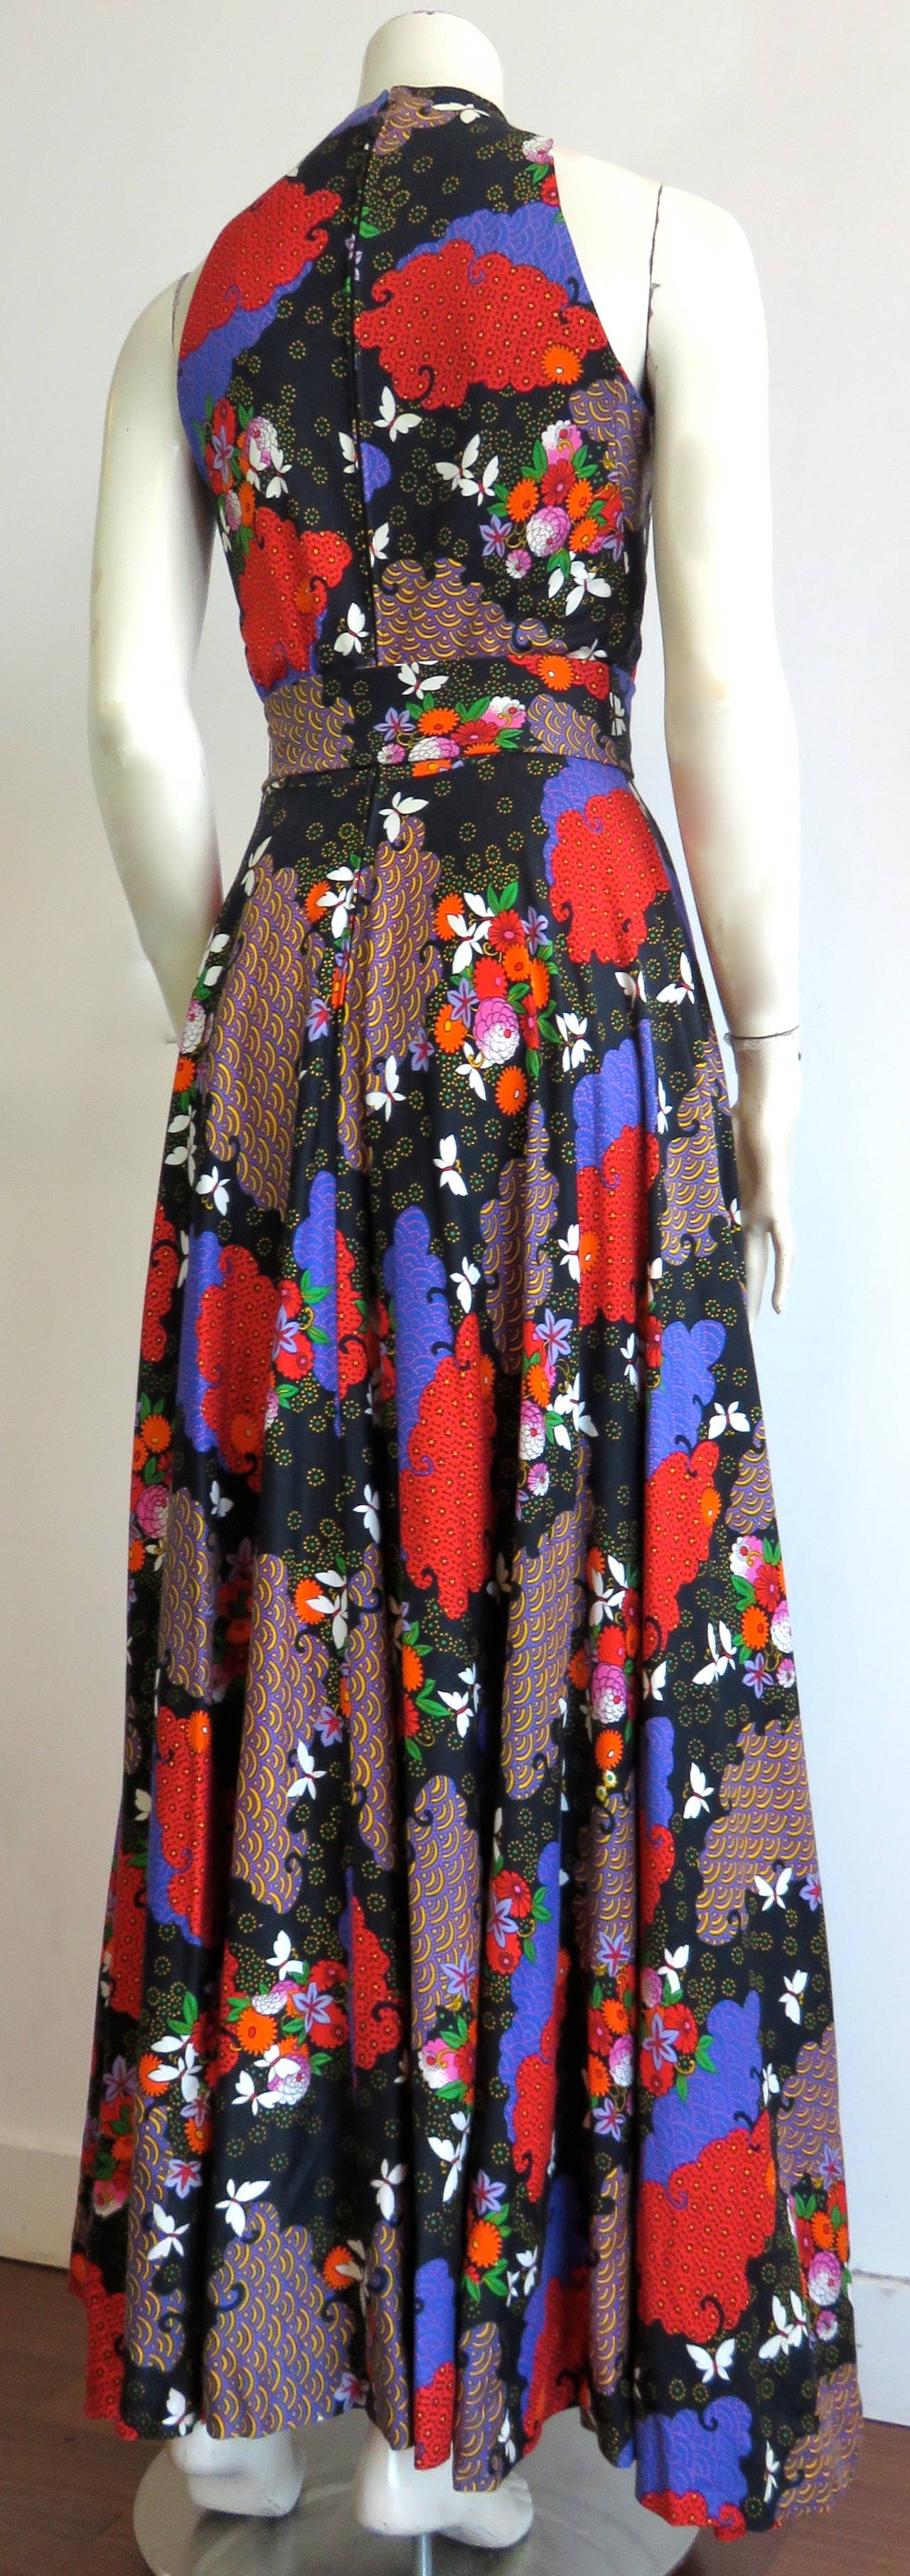 1970's GEOFFREY BEENE BOUTIQUE Floral print dress & belt For Sale 1